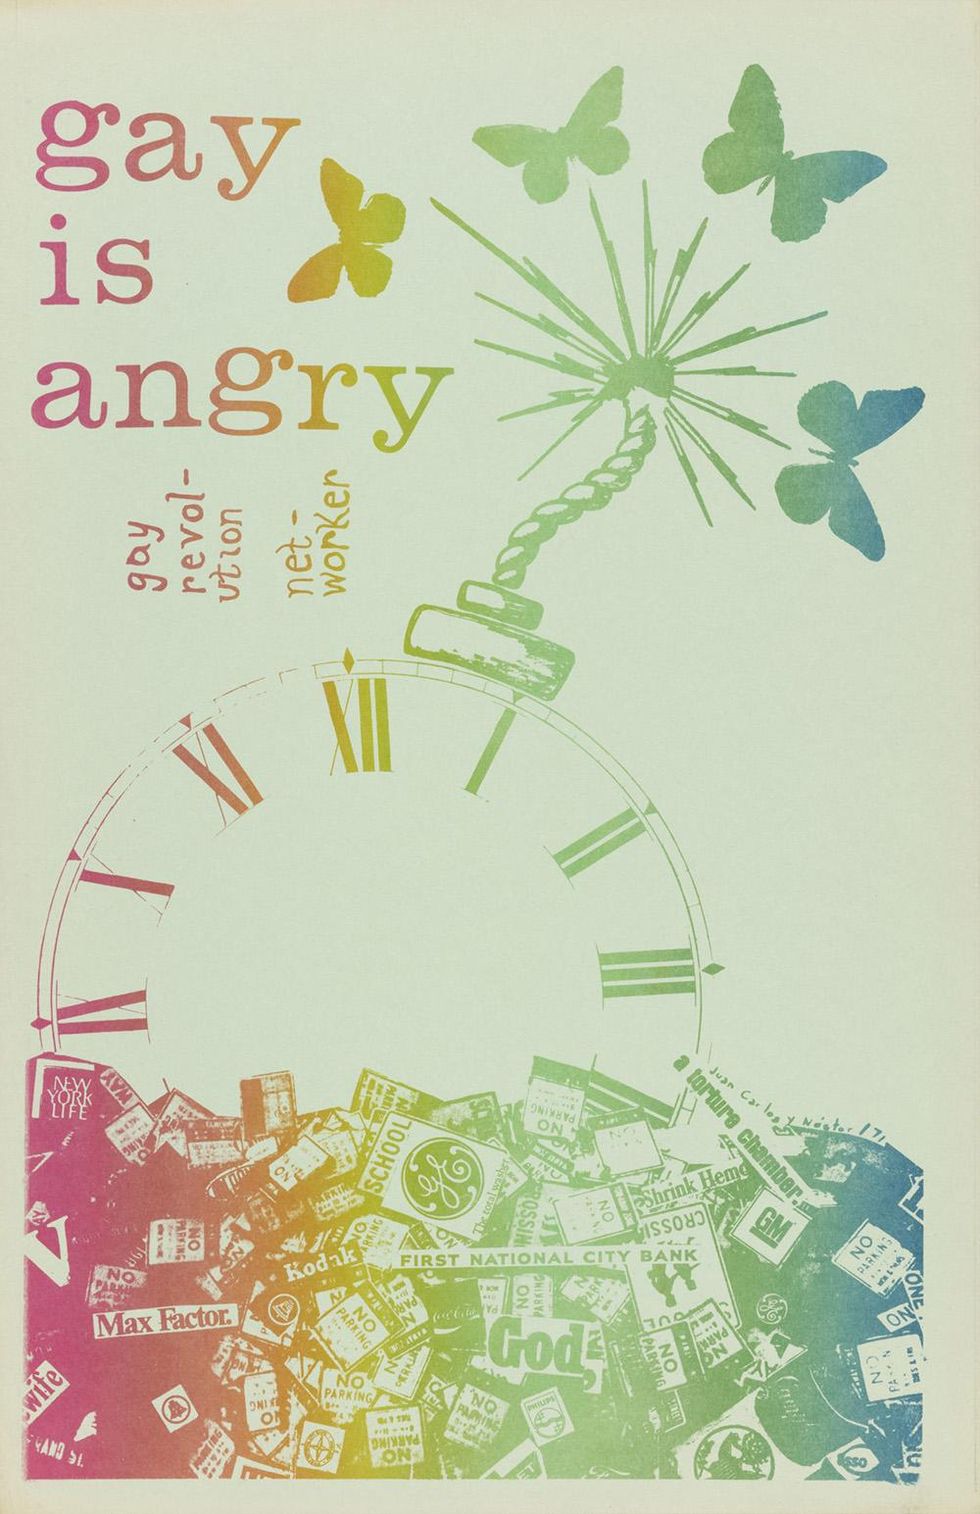 Days of Rage poster